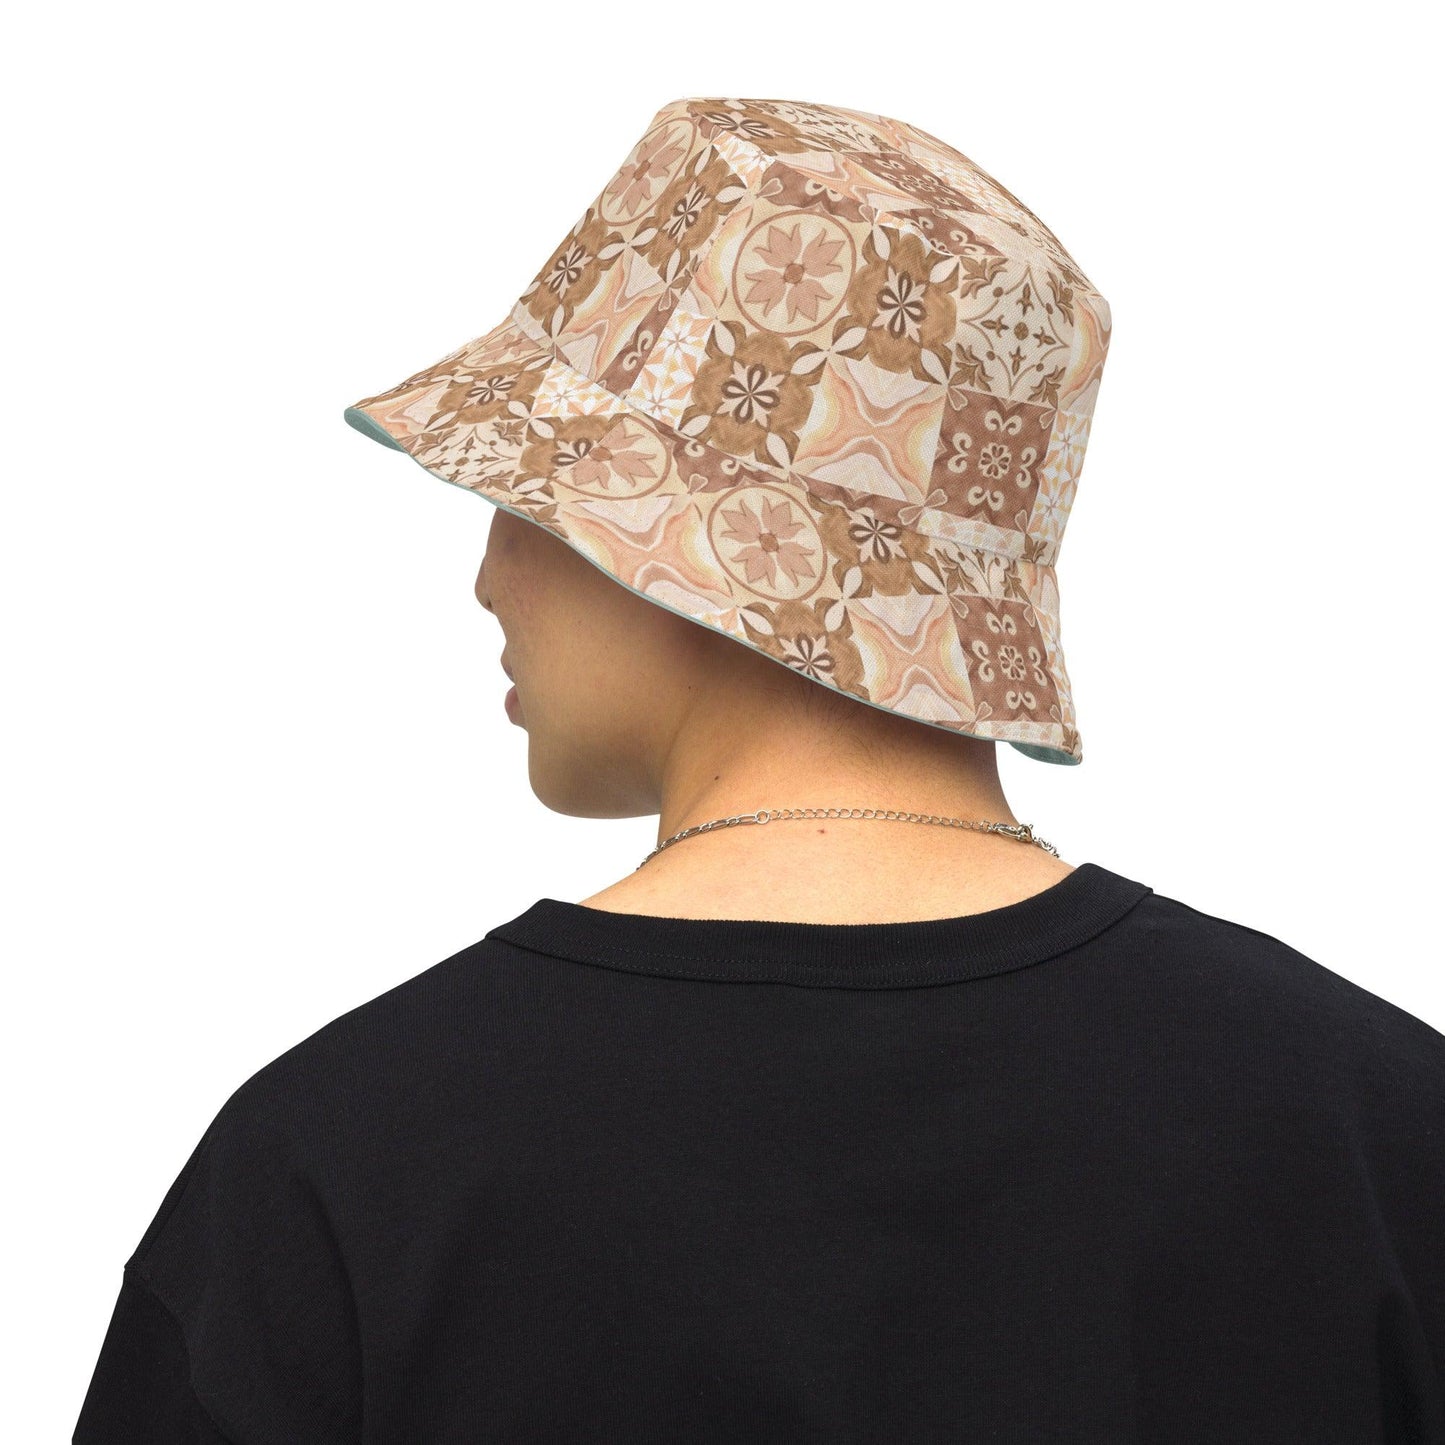 Moroccan Desert Tile Reversible Bucket Hat - The Global Wanderer